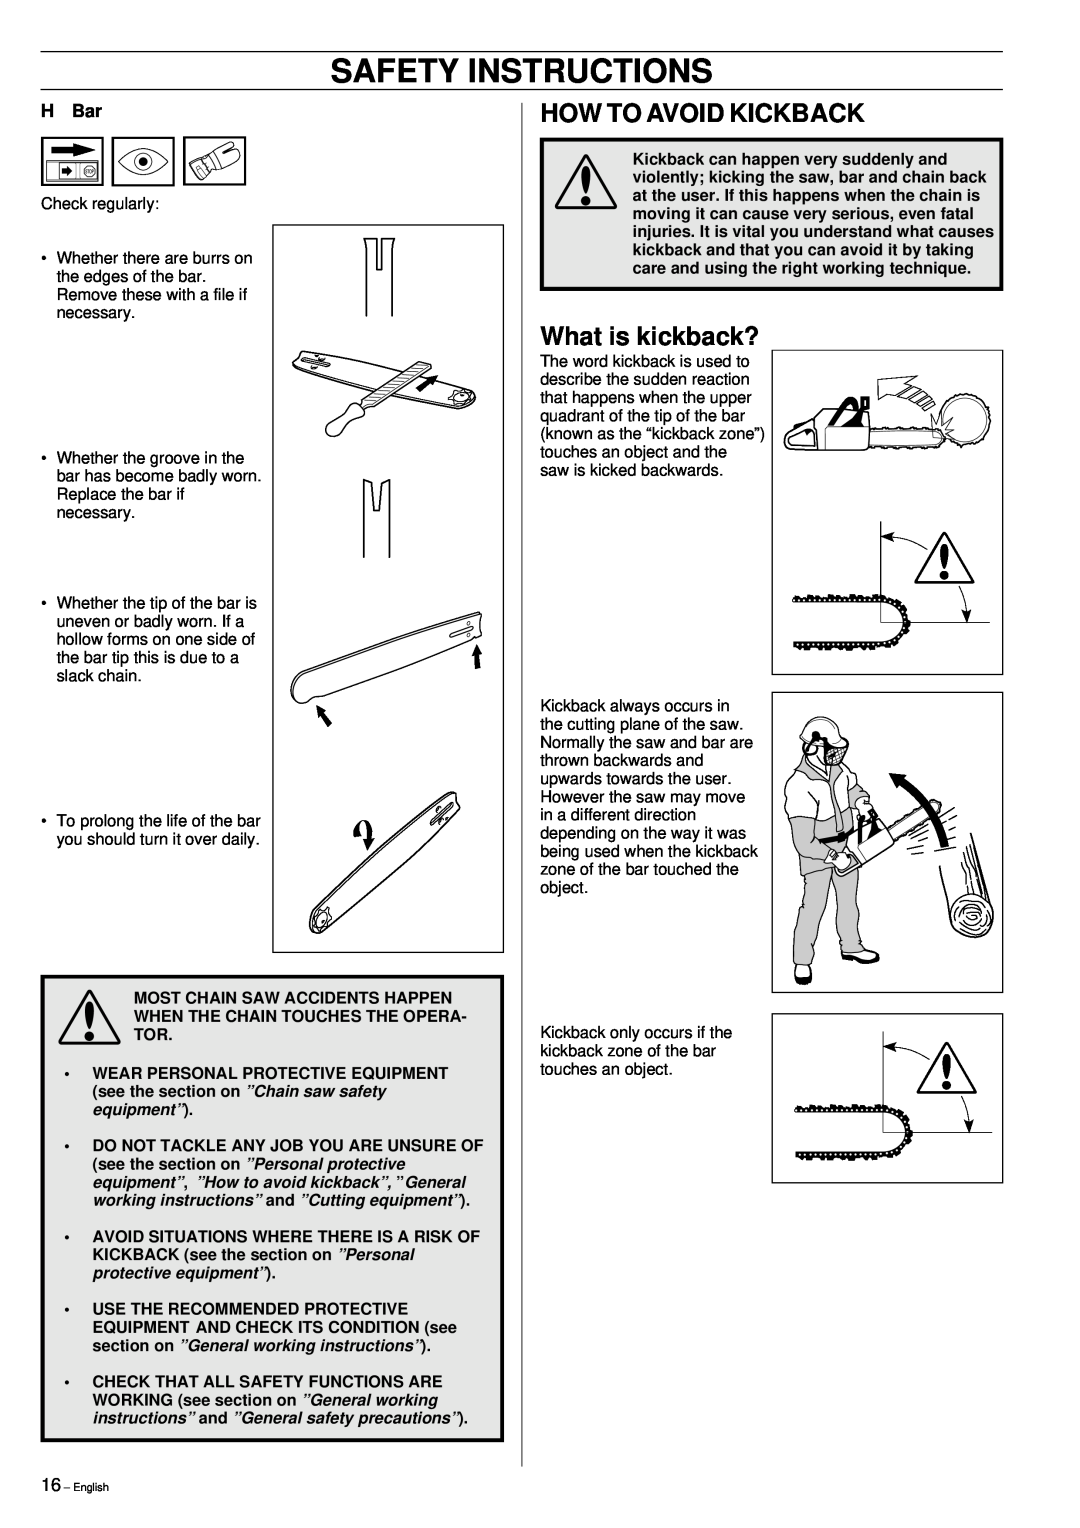 Husqvarna 61, 268, 272XP manual How To Avoid Kickback, What is kickback?, Safety Instructions, H Bar 